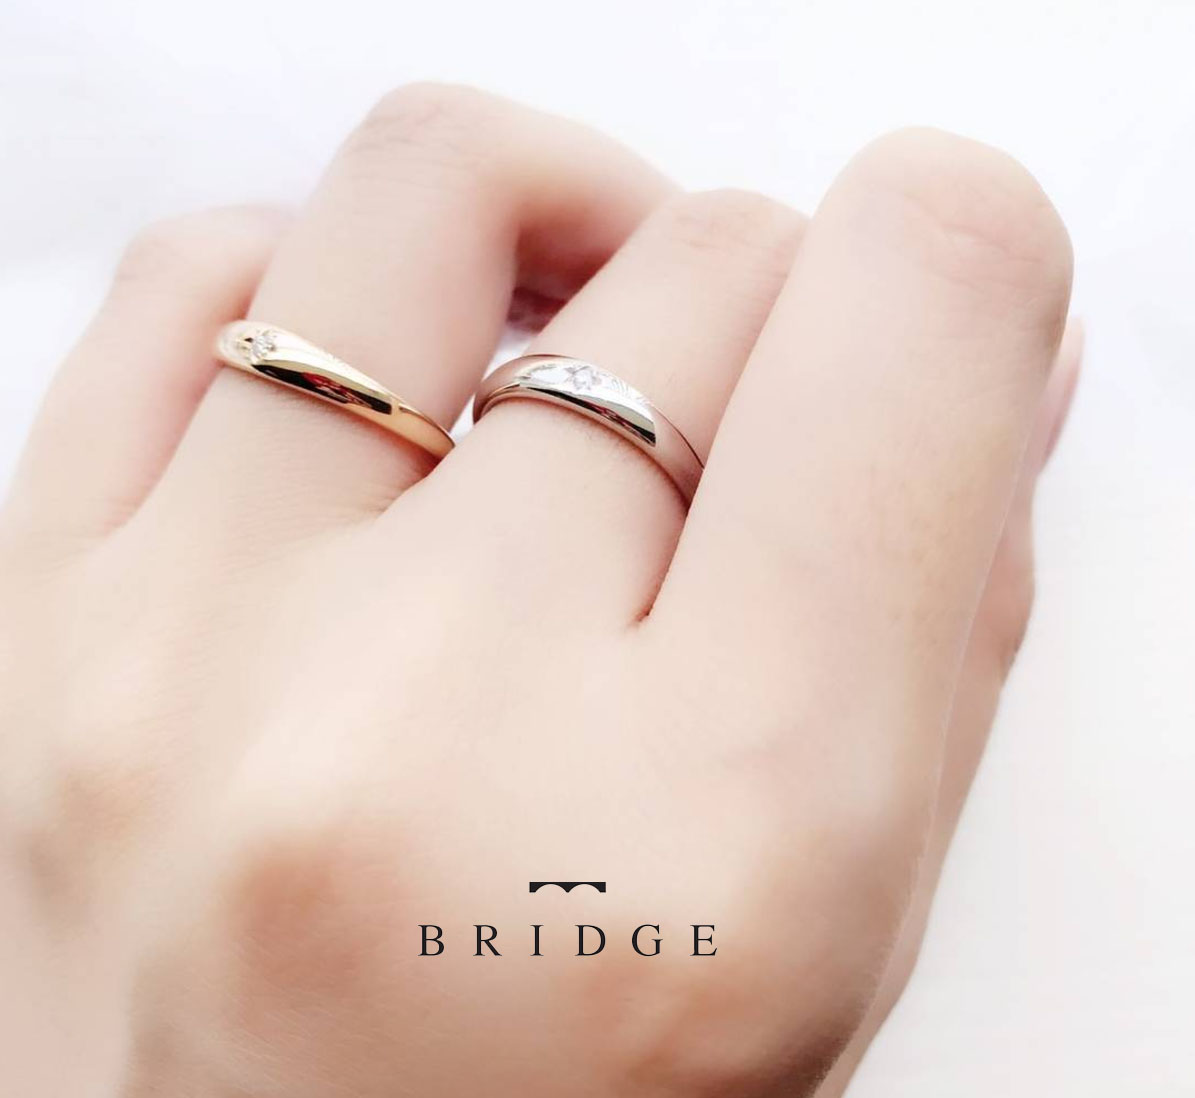 BRIDGE銀座で人気のマリッジリング（結婚指輪）シンプルなストレートPT950で、着け心地は抜群。人とは違うデザインをお探しの方におススメ。